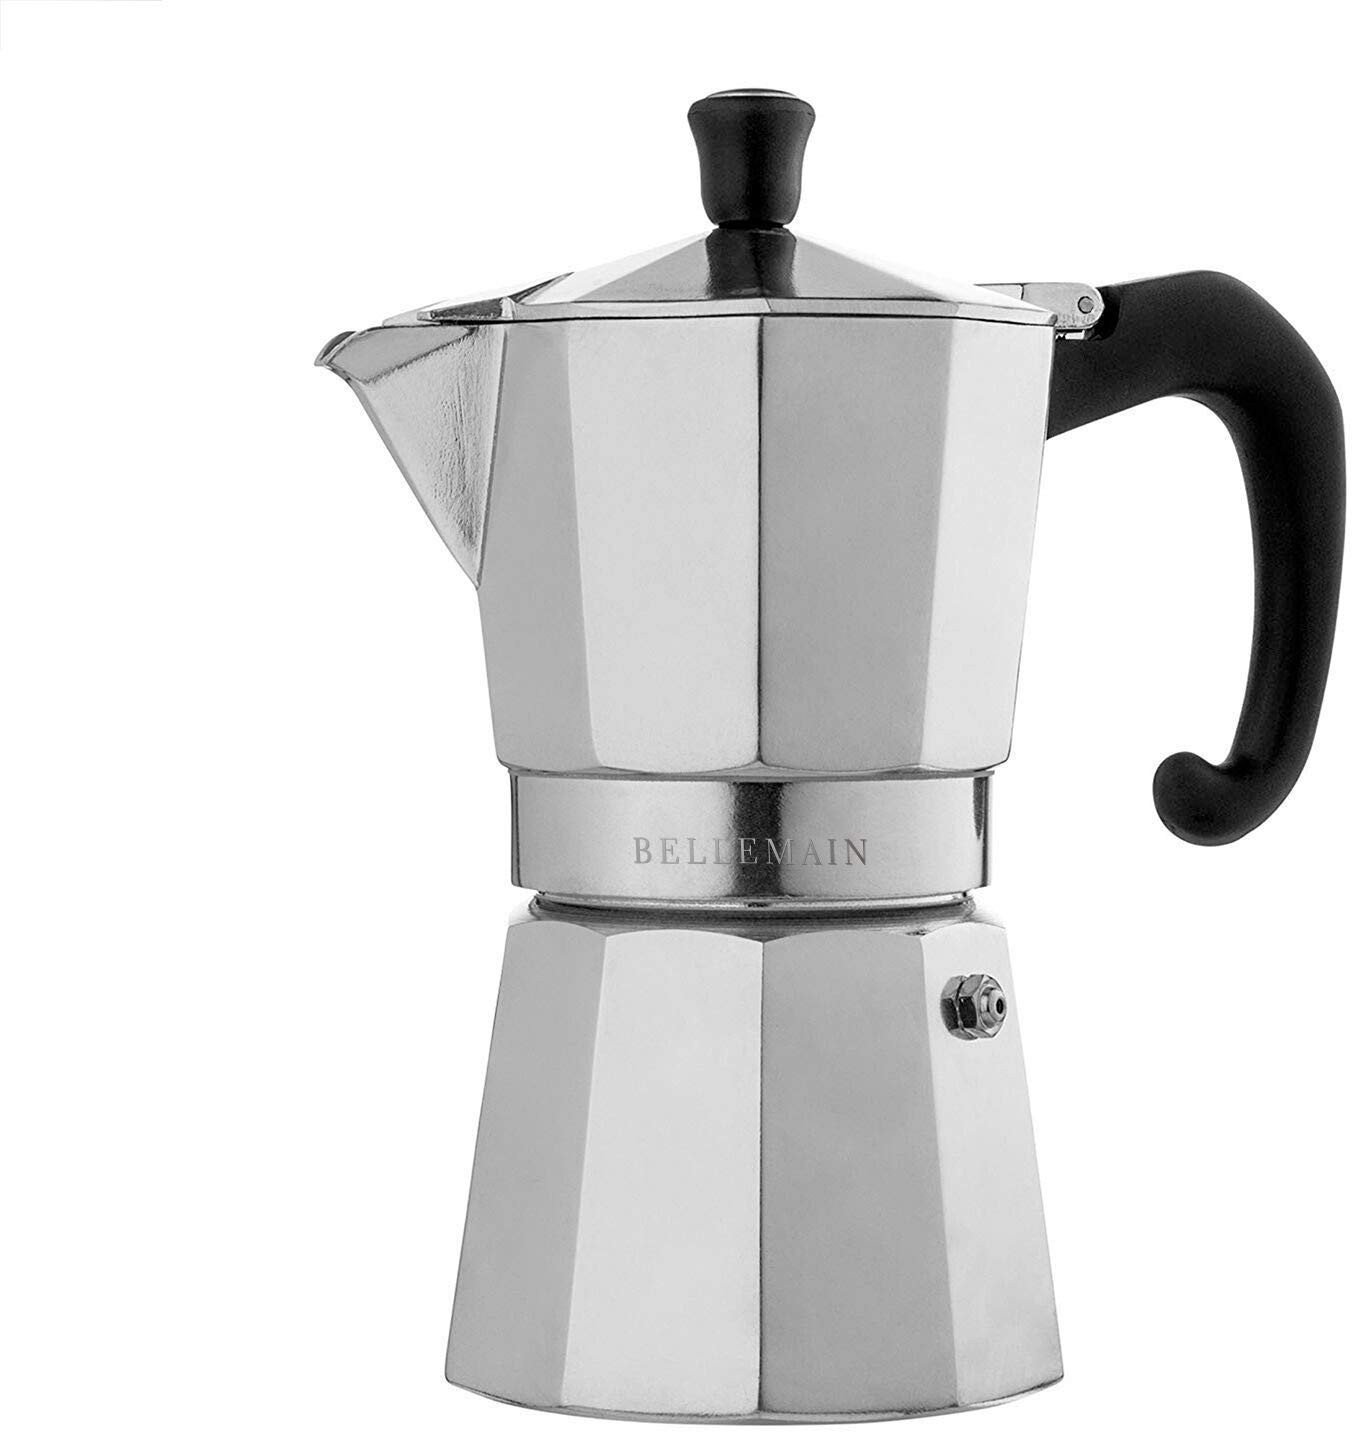 https://www.dontwasteyourmoney.com/wp-content/uploads/2020/03/bellemain-stovetop-moka-pot-espresso-maker-stove-top-espresso-maker.jpg